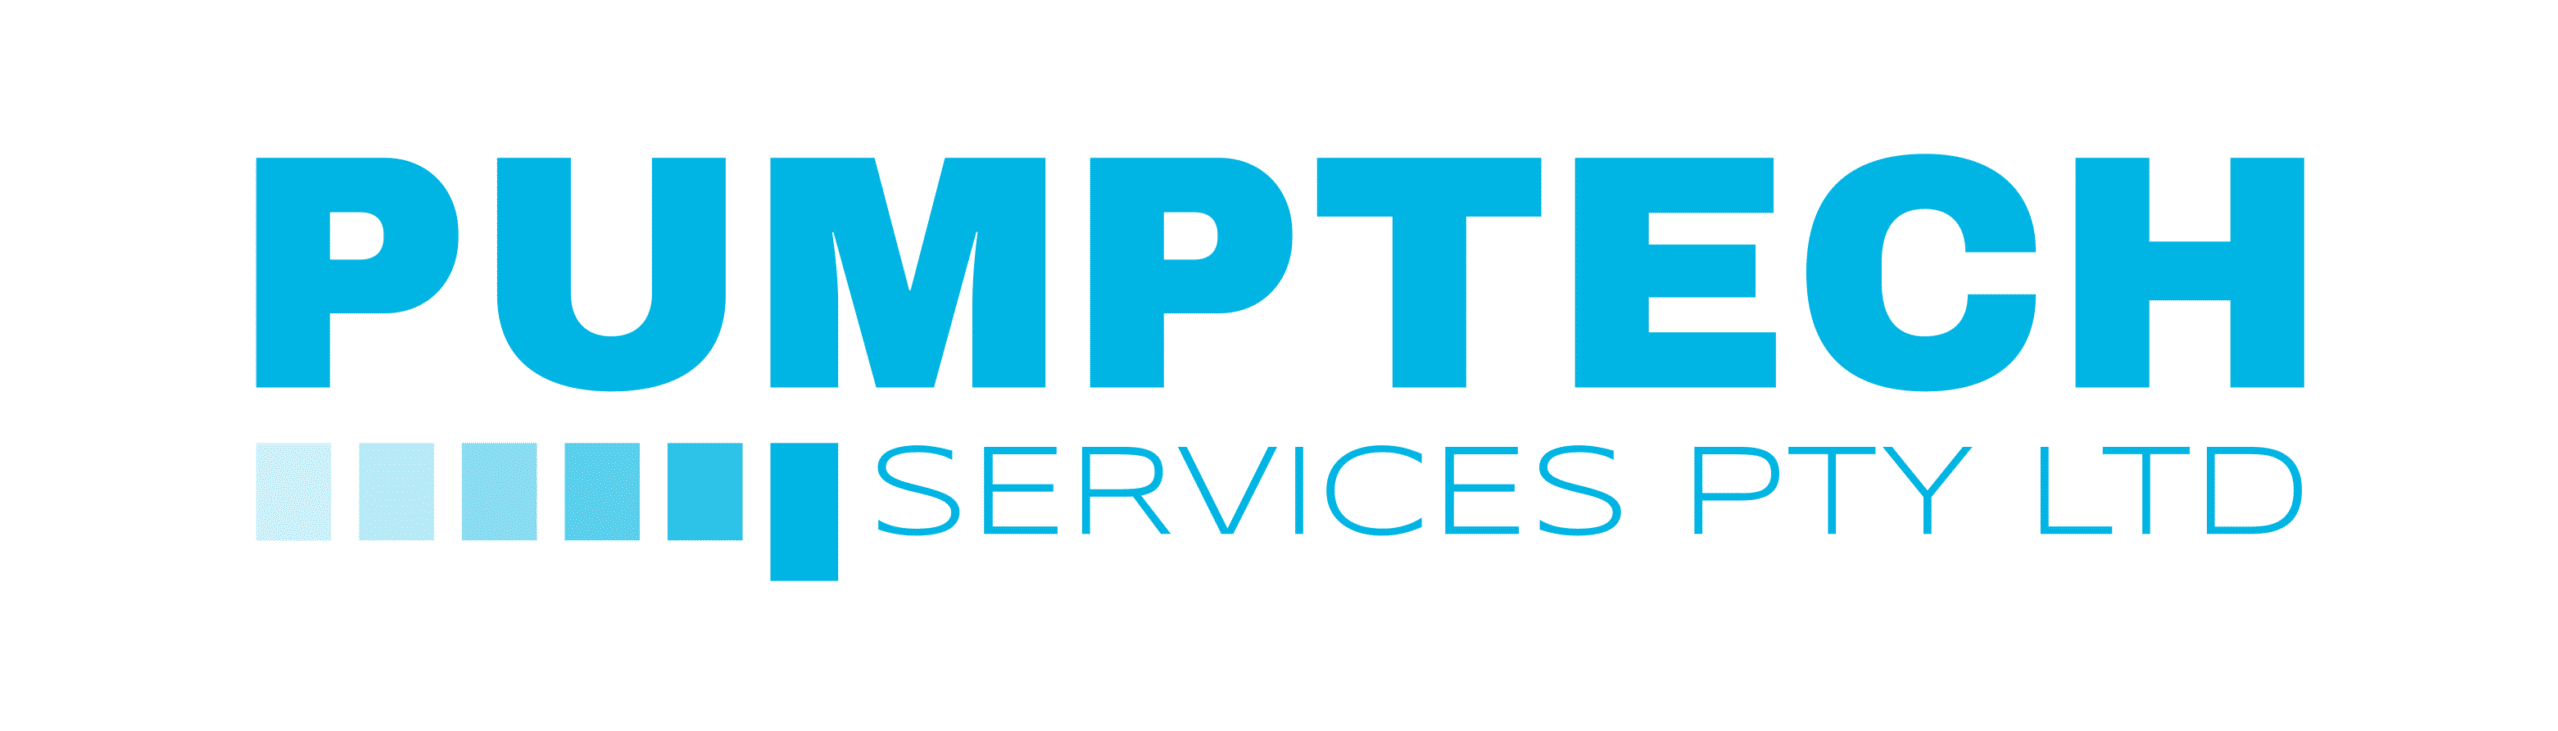 Pump Tech Services Logo